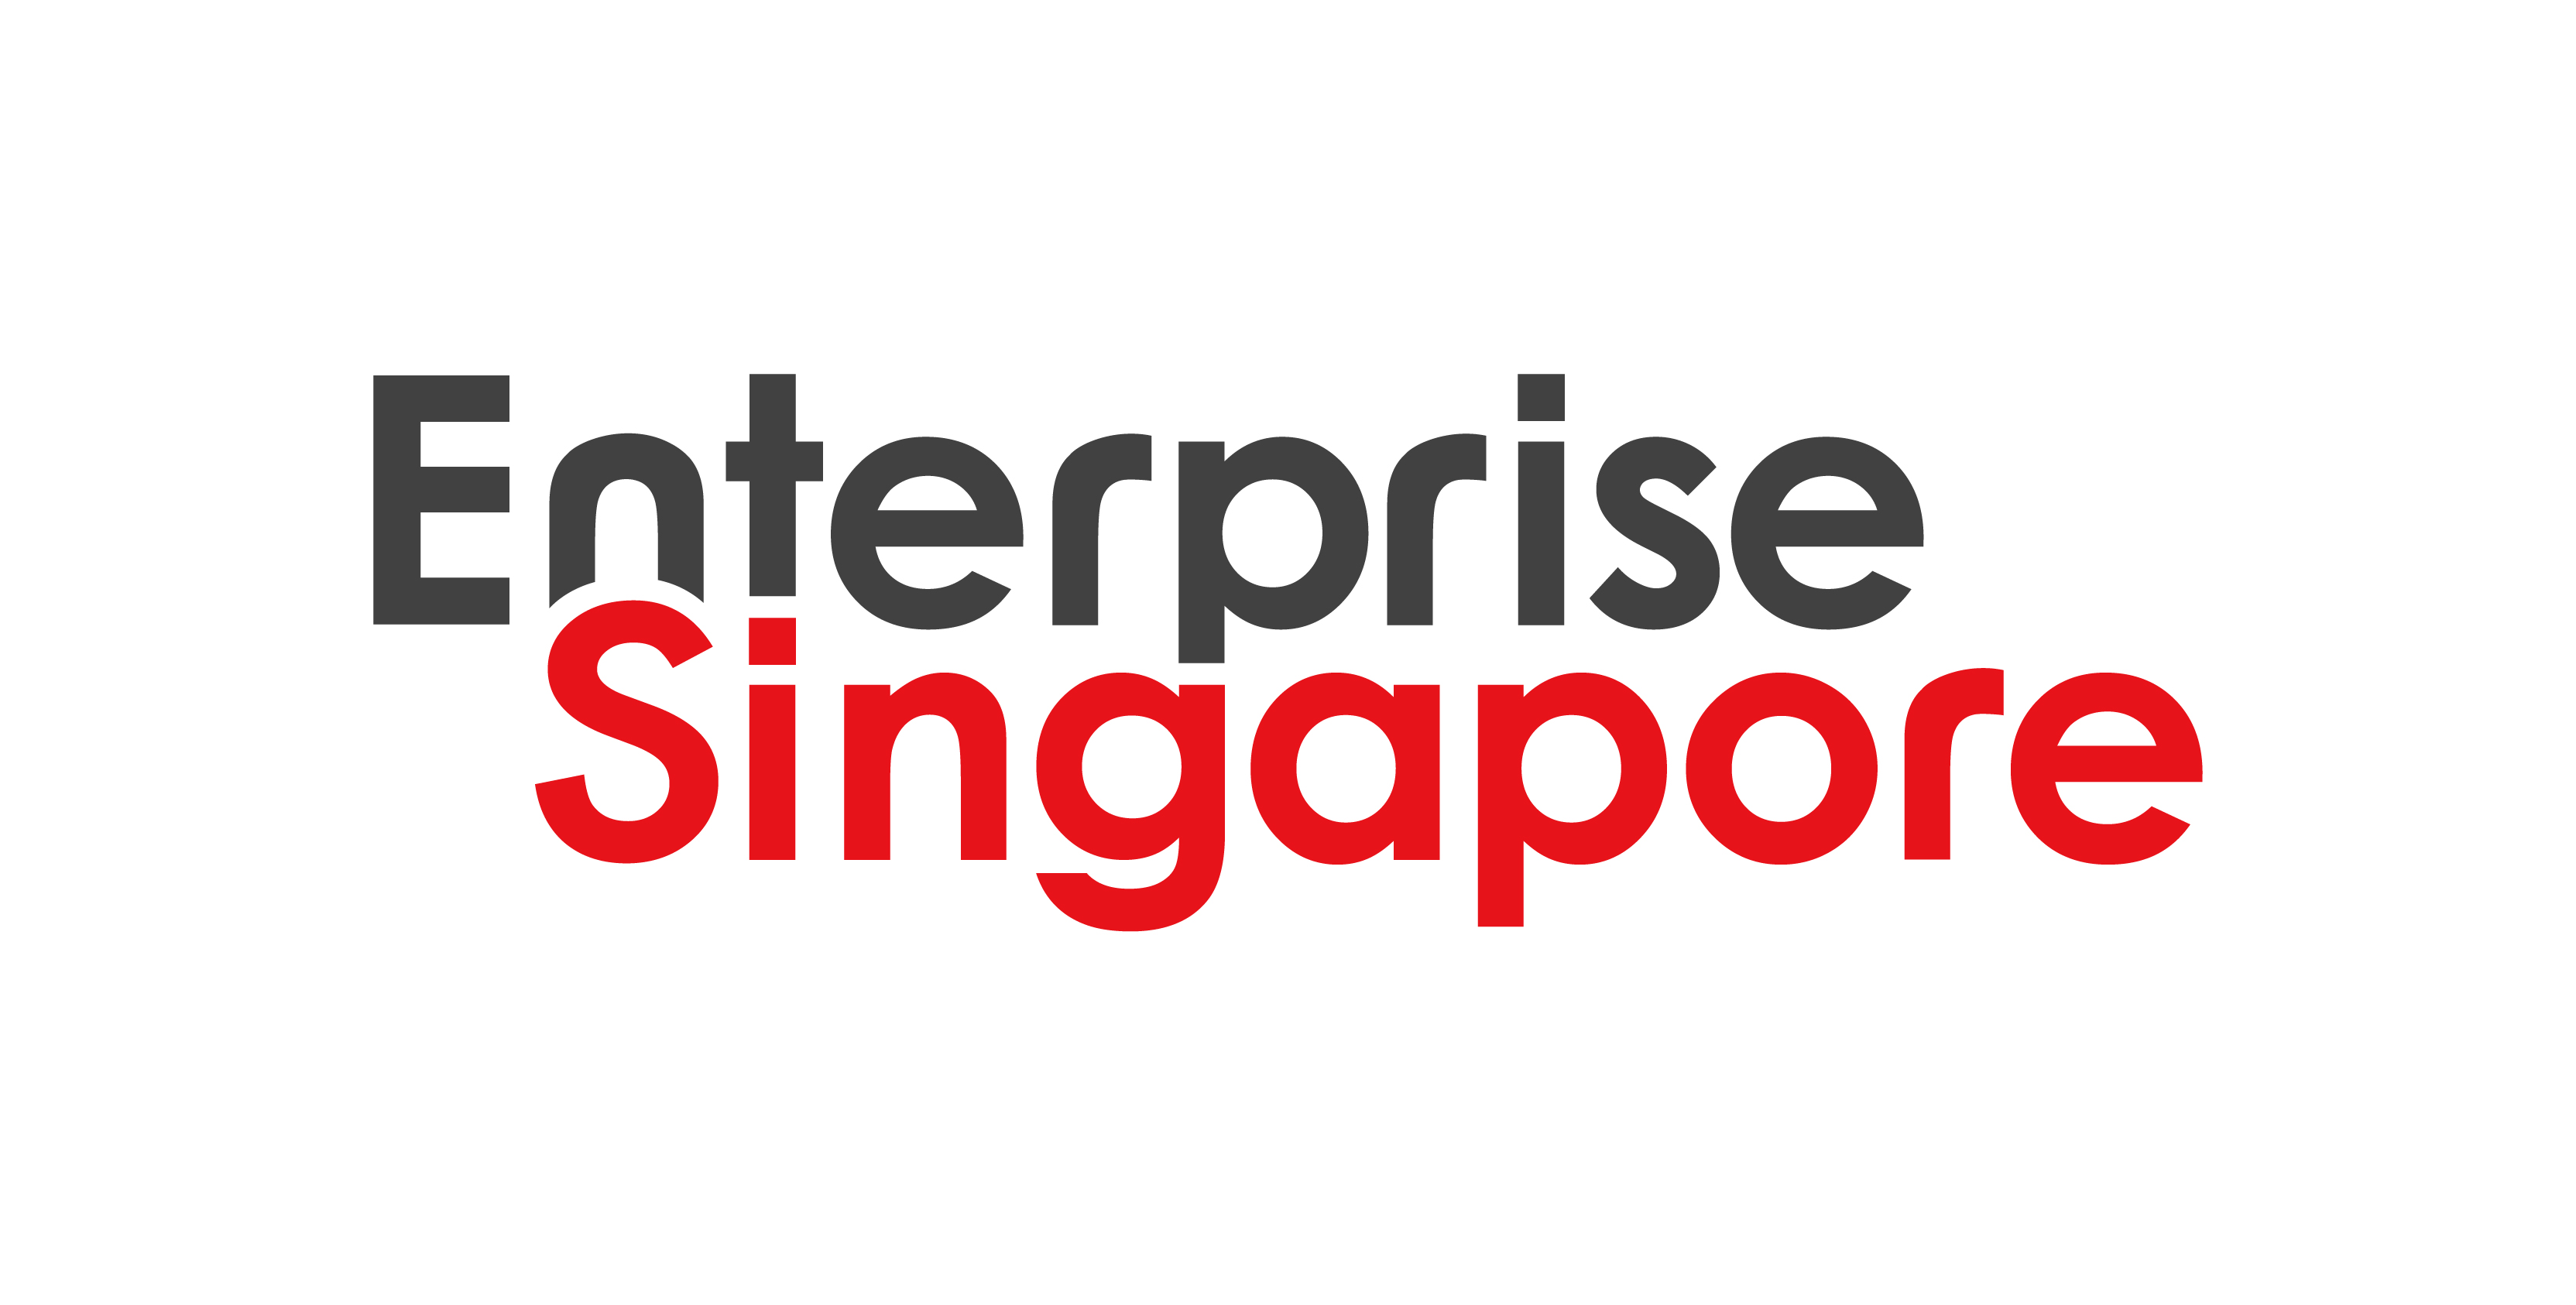 Enterprise Singapore logo